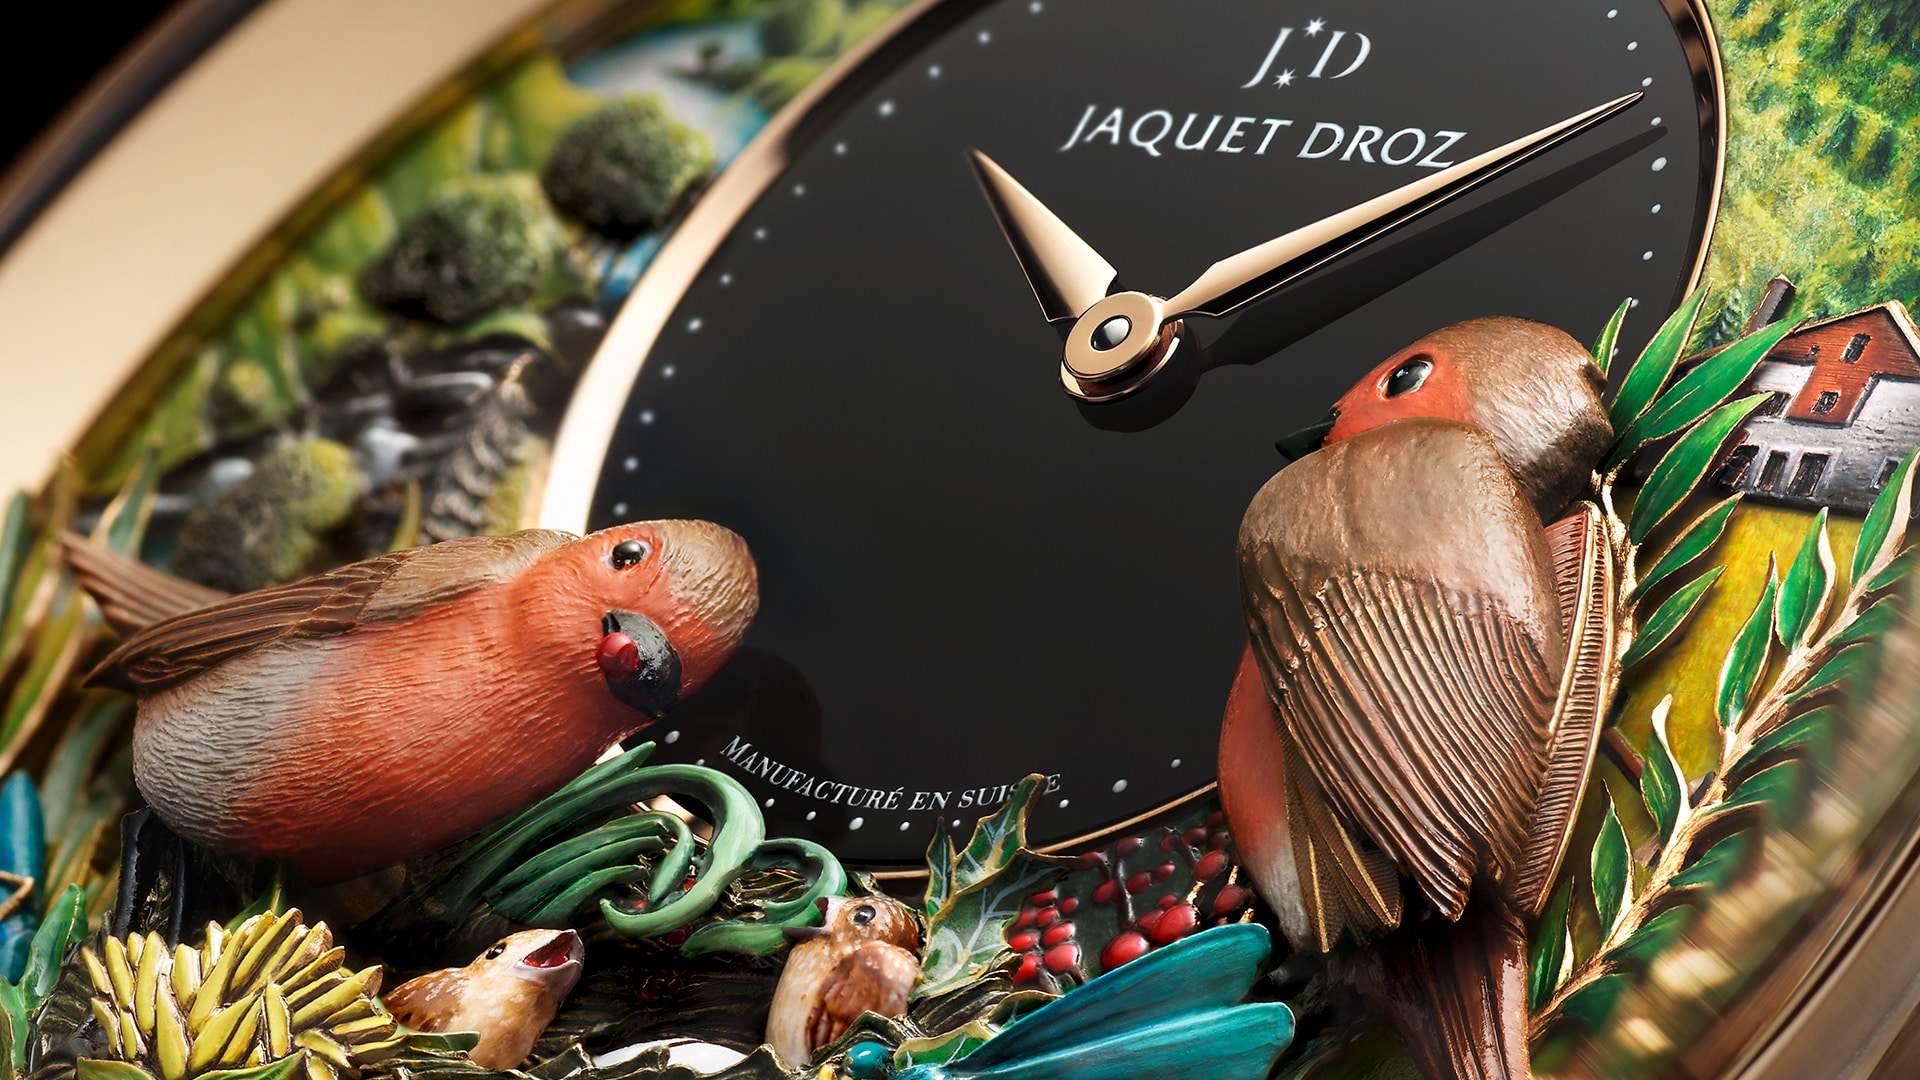 雅克德罗发布“300周年纪念款”报时鸟三问表（BIRD REPEATER “300TH ANNIVERSARY EDITION”)